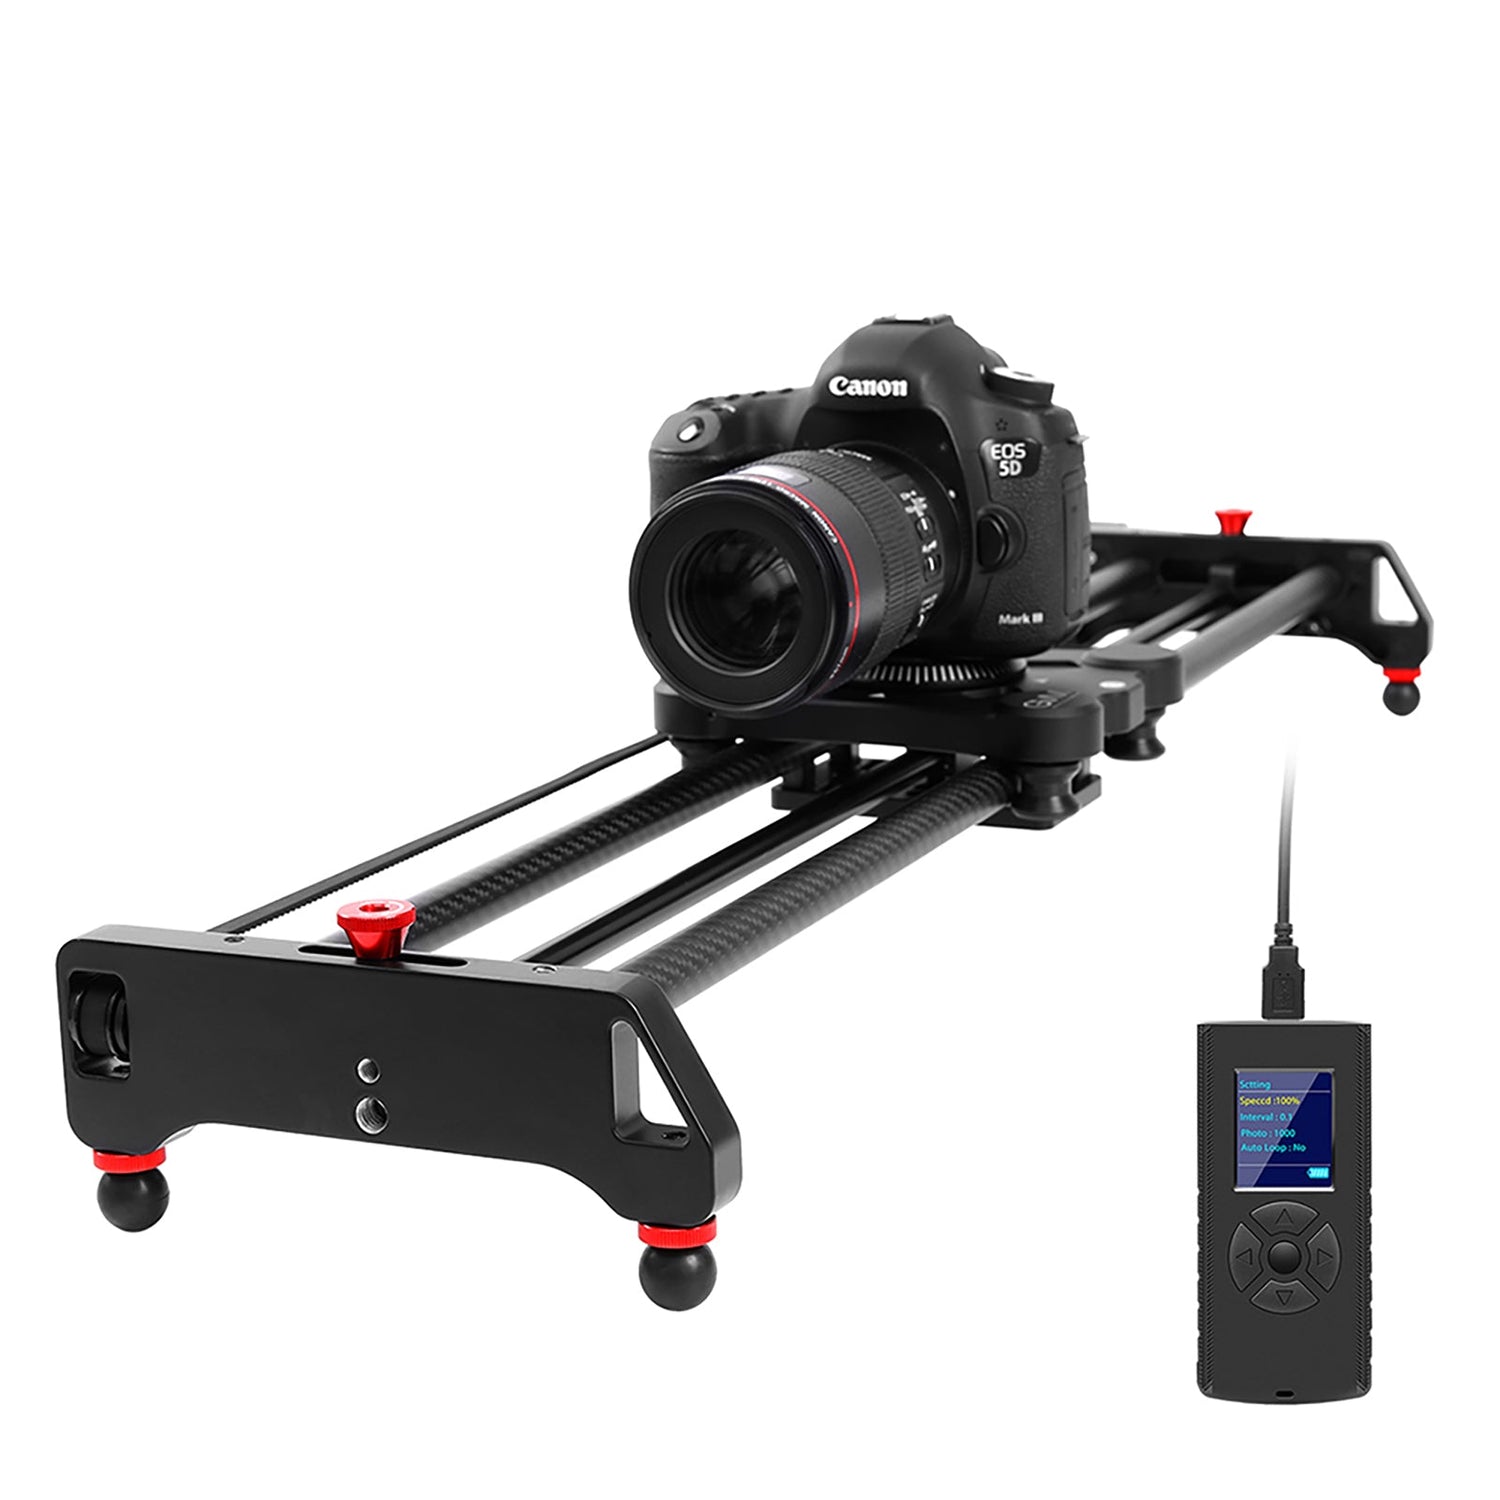 GVM GR-80QD Professional Video Carbon Fiber Motorized Camera Slider (32